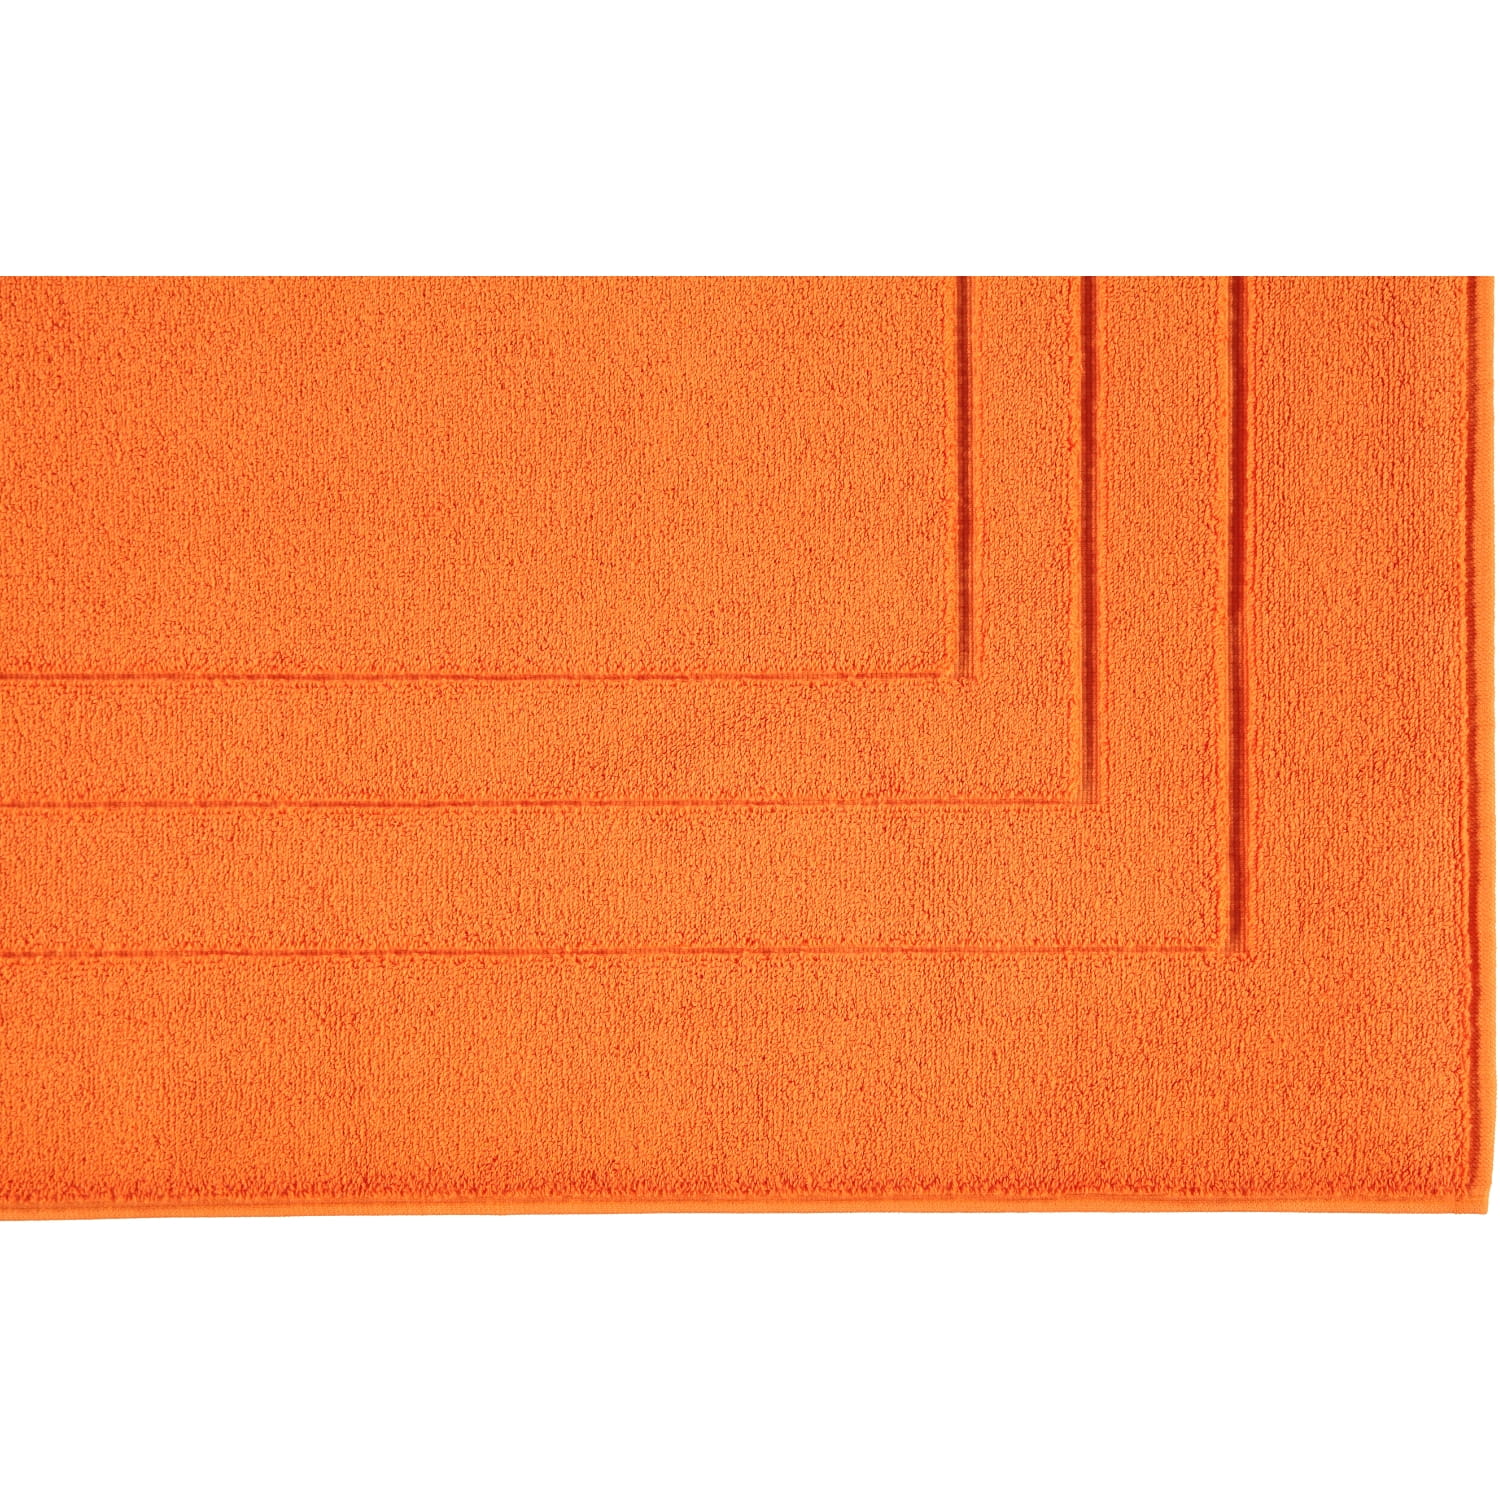 Vossen Badematte Calypso Feeling orange - Farbe: Vossen - Badematte | Vossen | Marken | 255